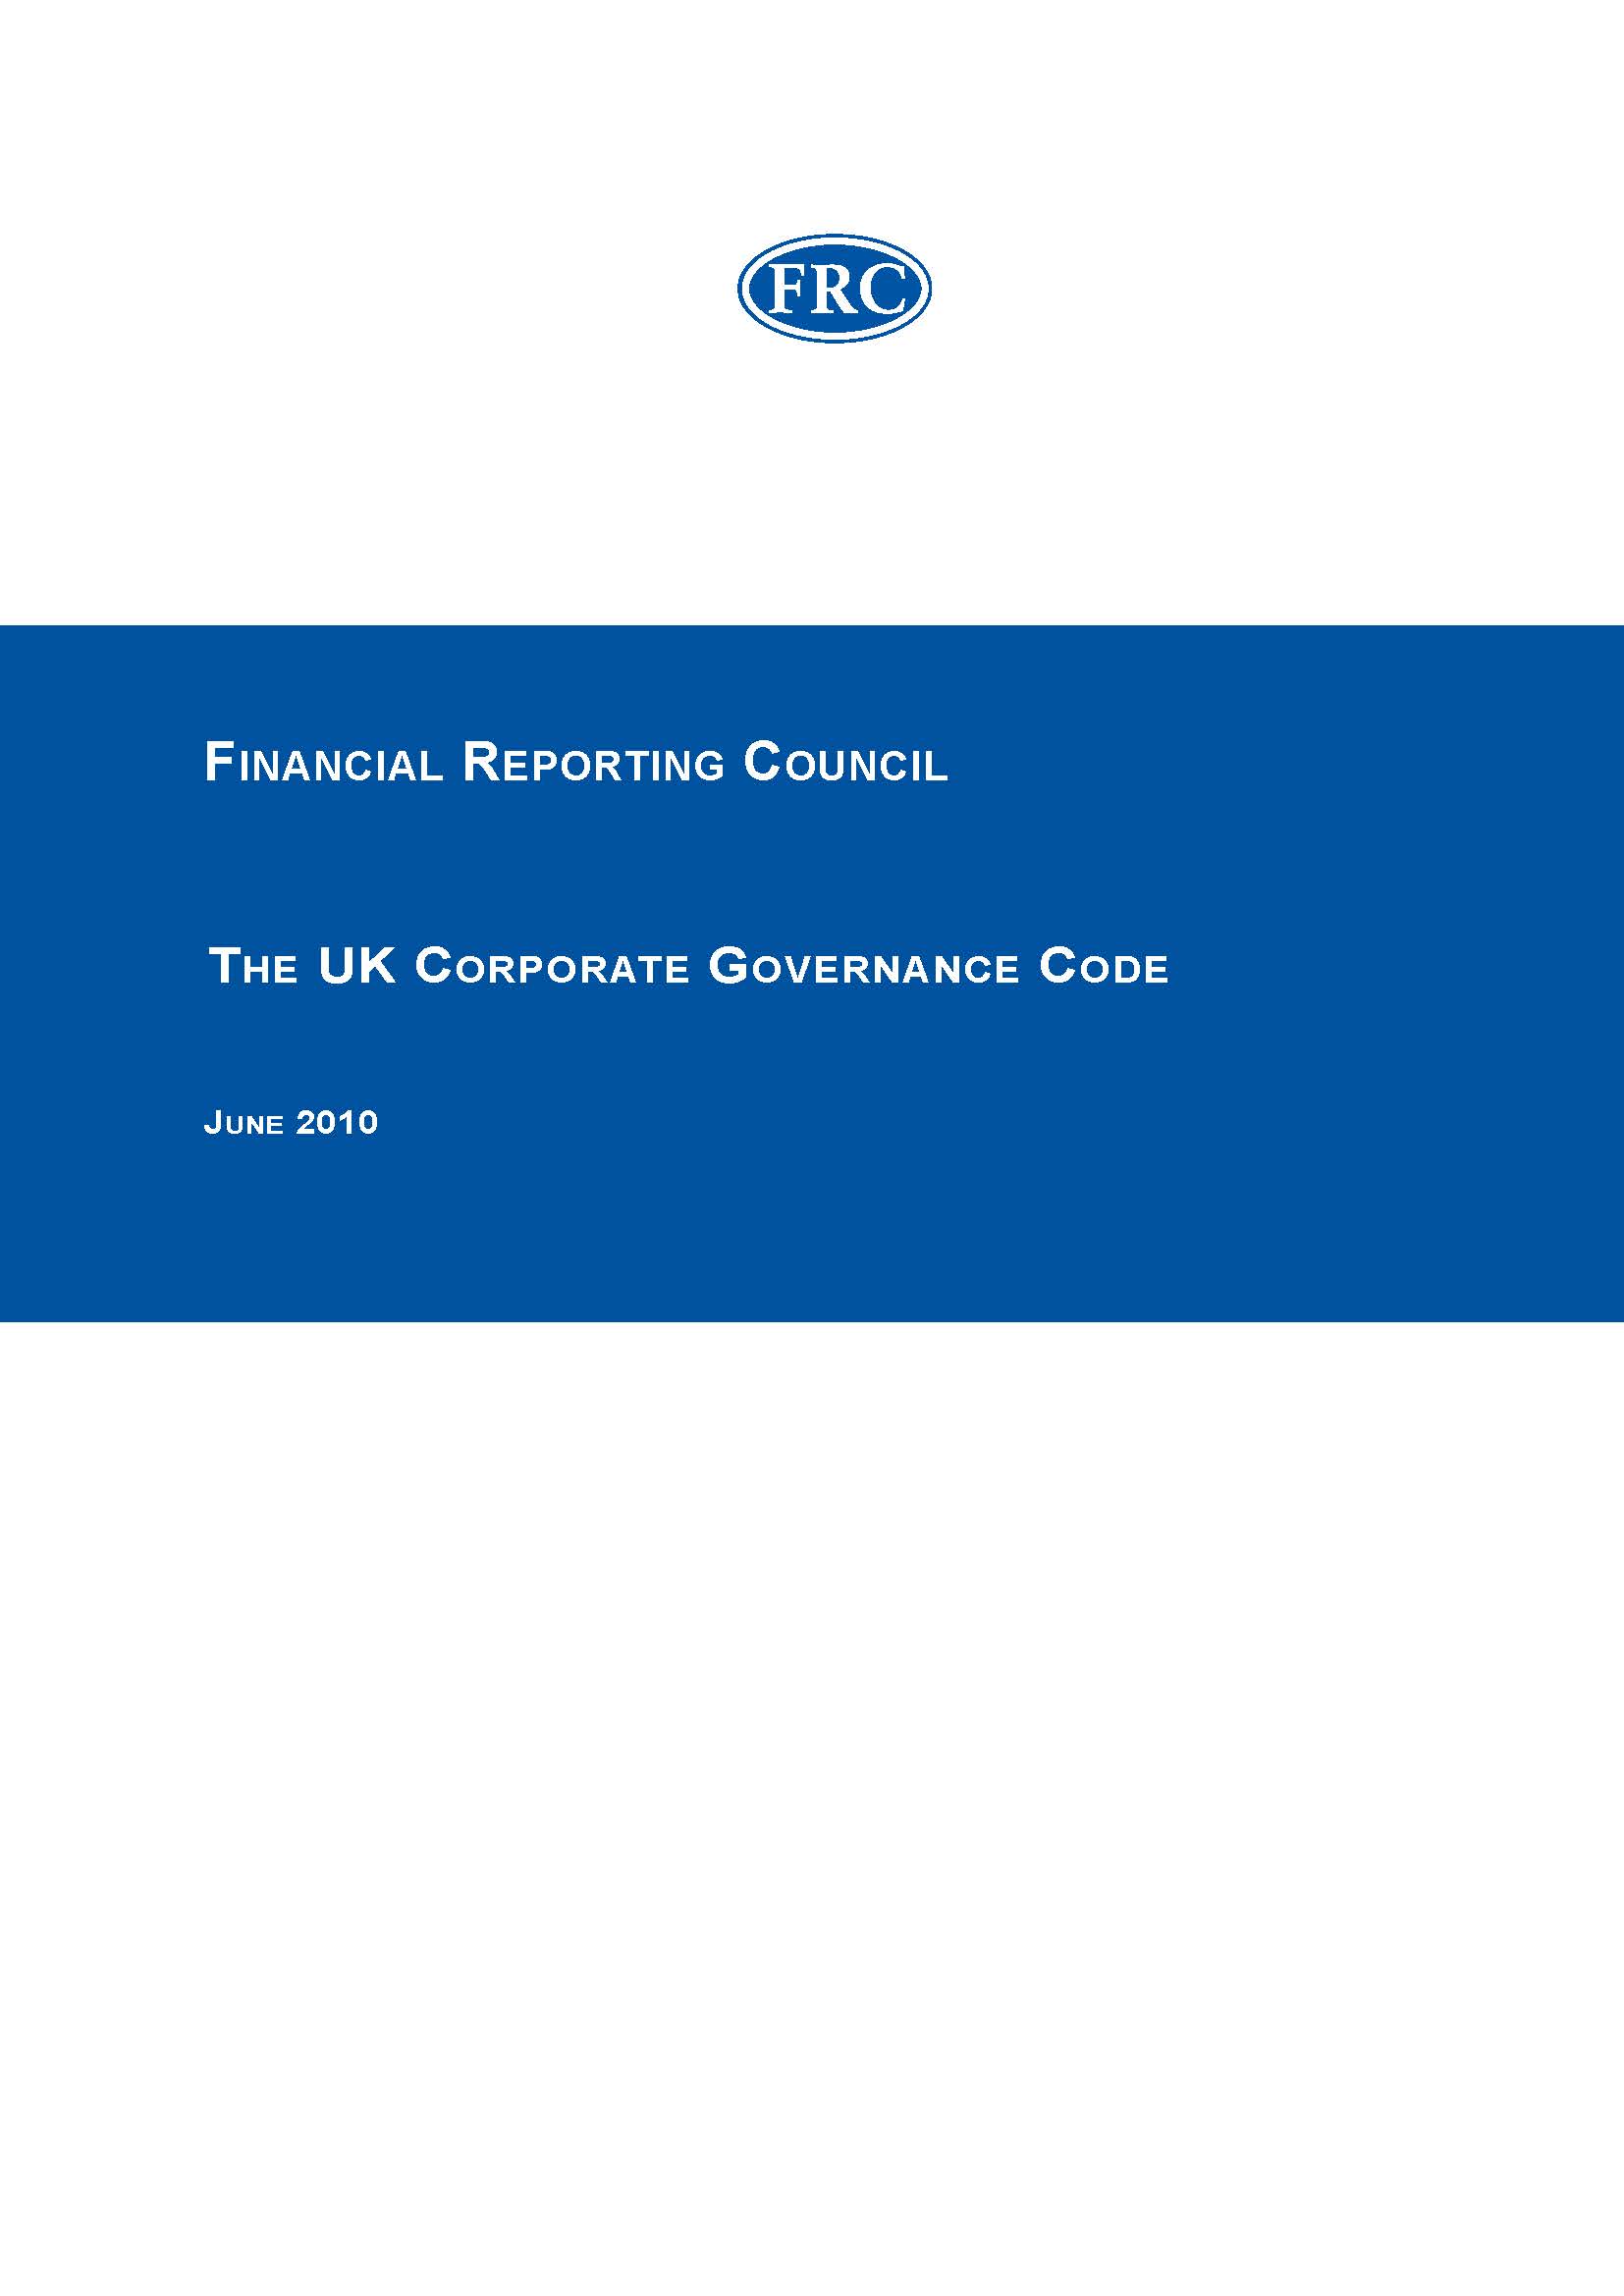 The UK Corporate Governance Code ECGI